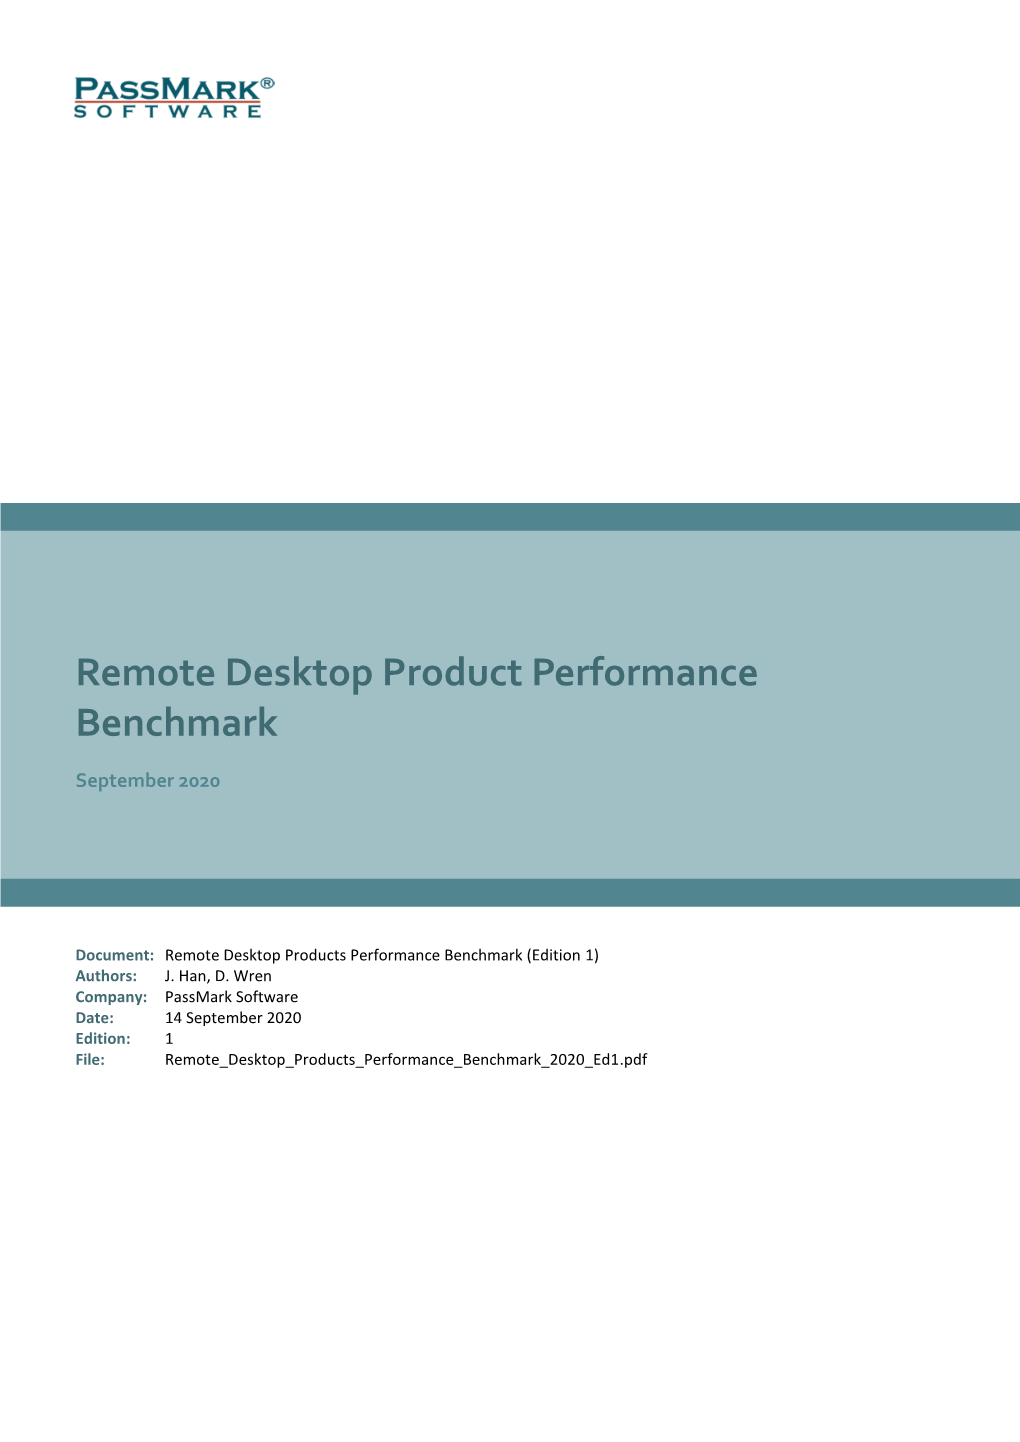 Remote Desktop Product Performance Benchmark 2020